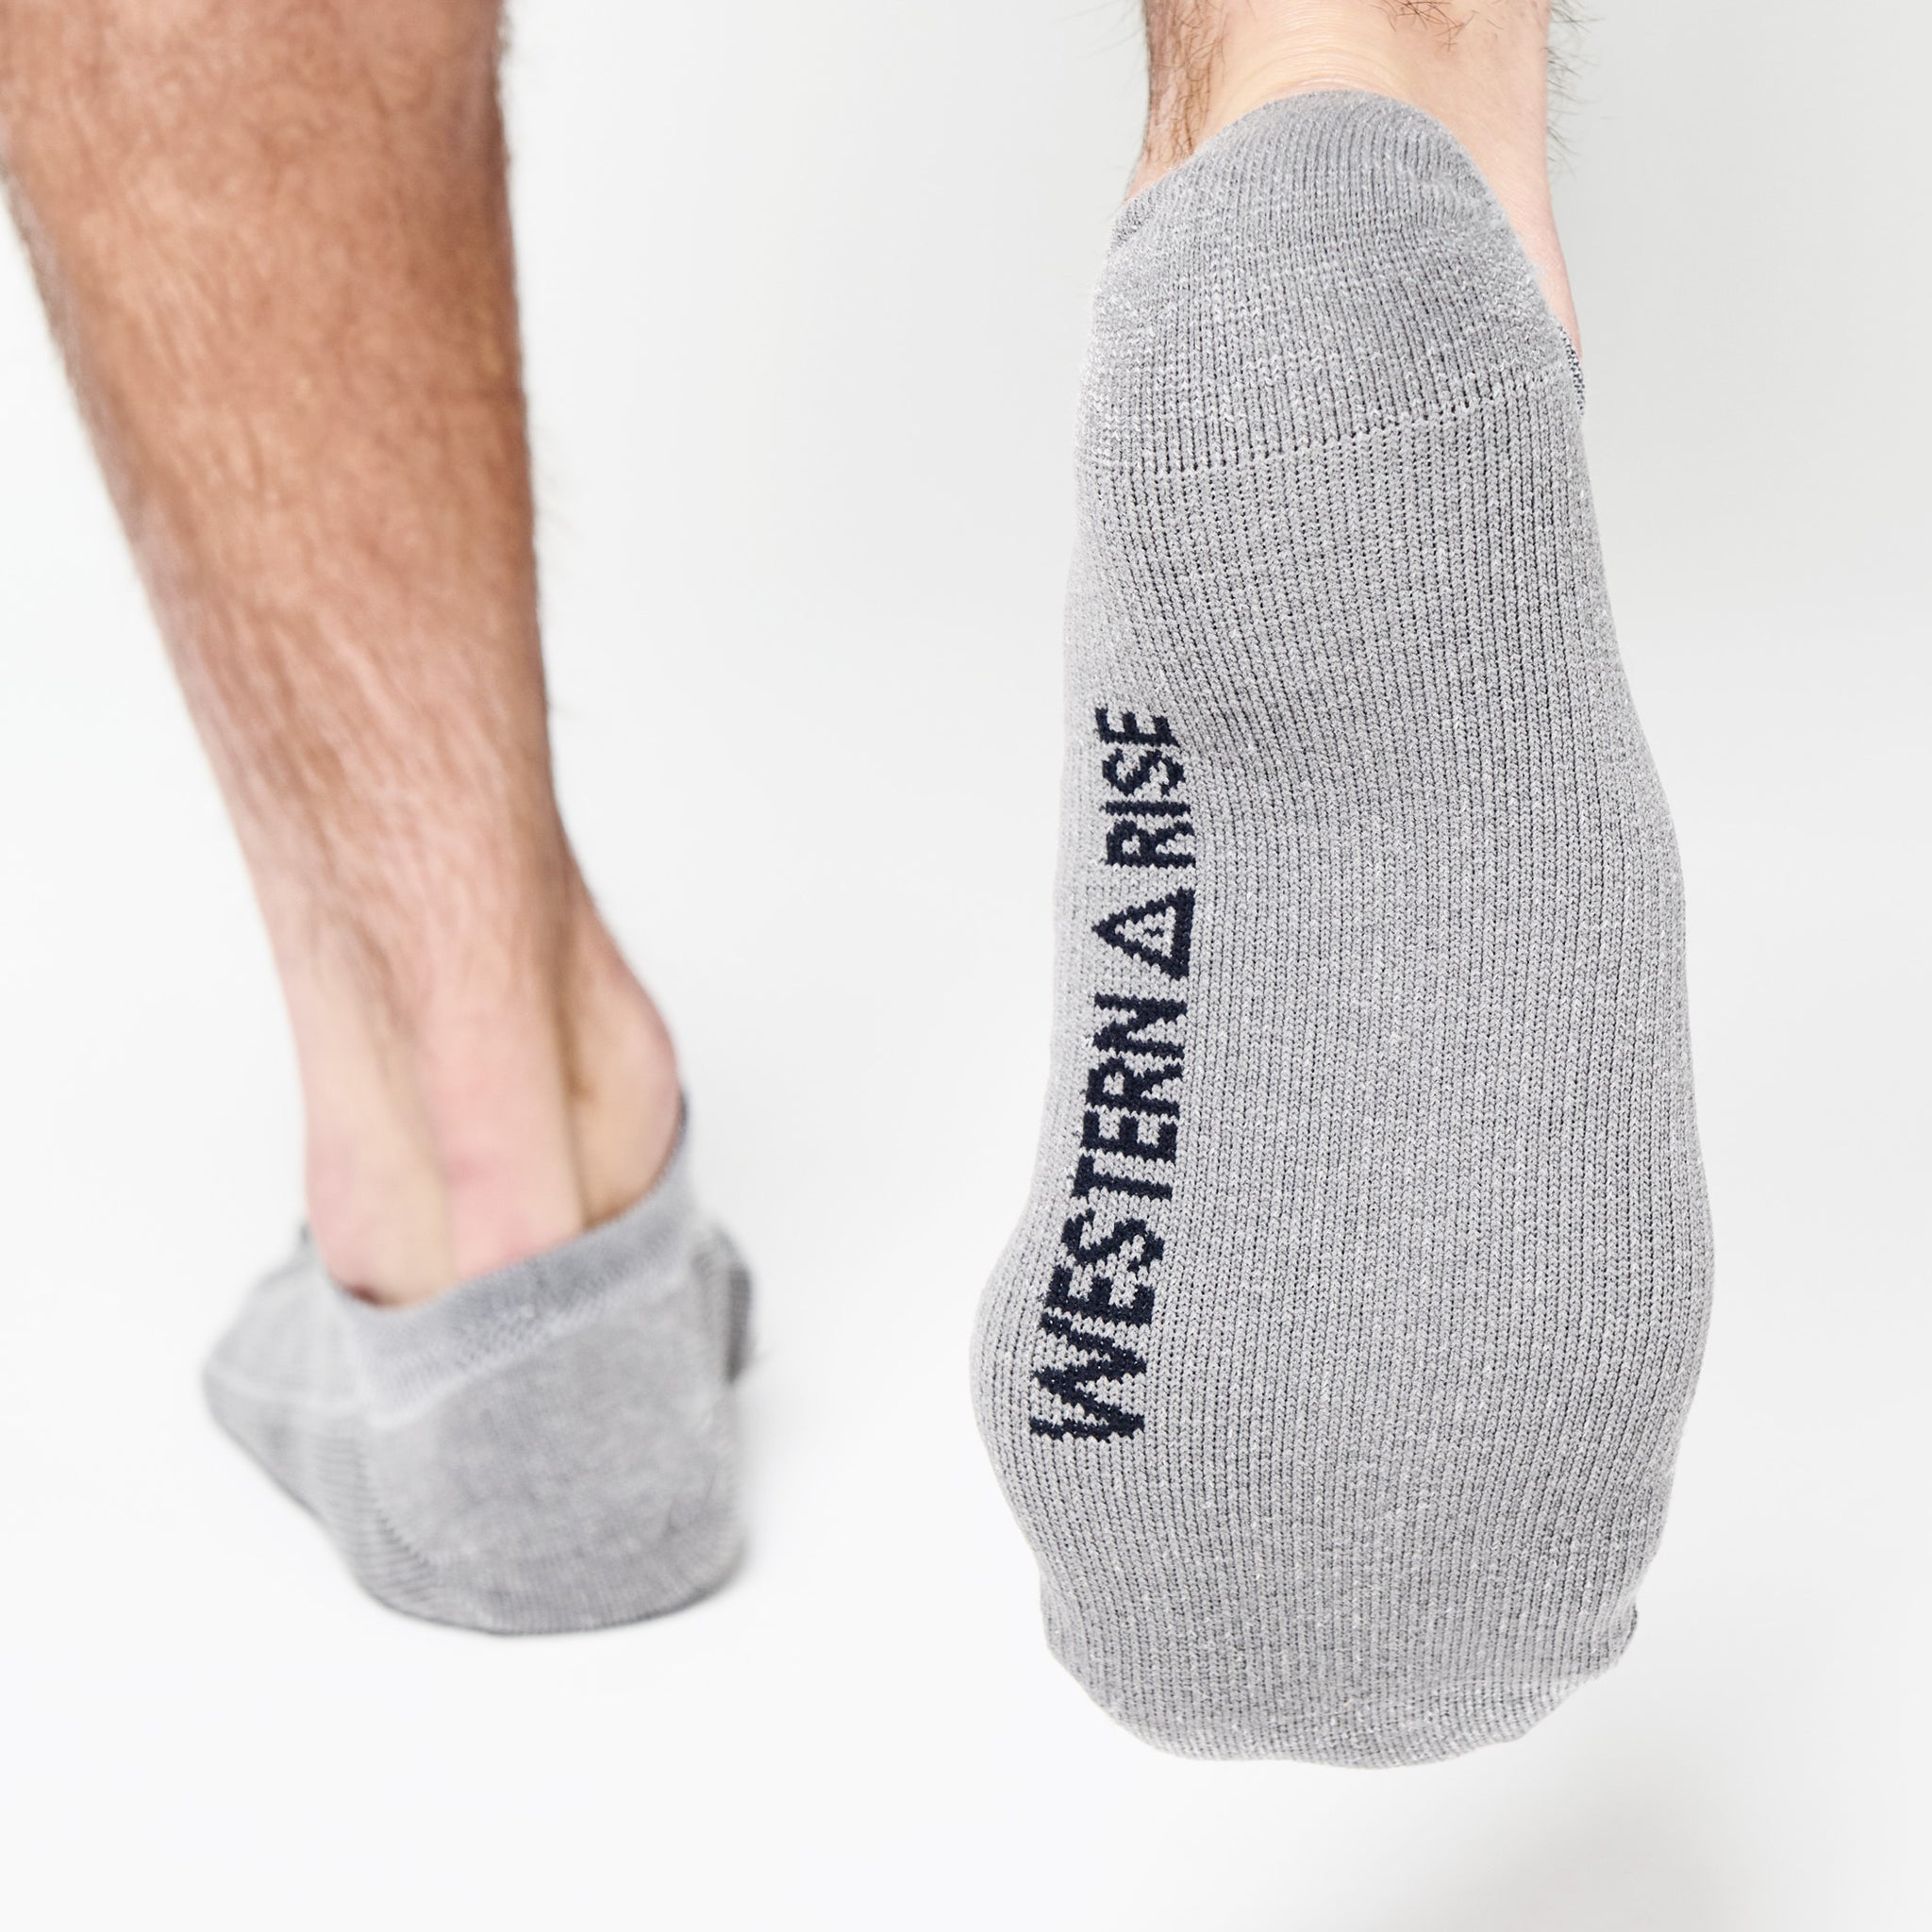 Moisture Wicking Socks: The Best Socks 2021 | Western Rise